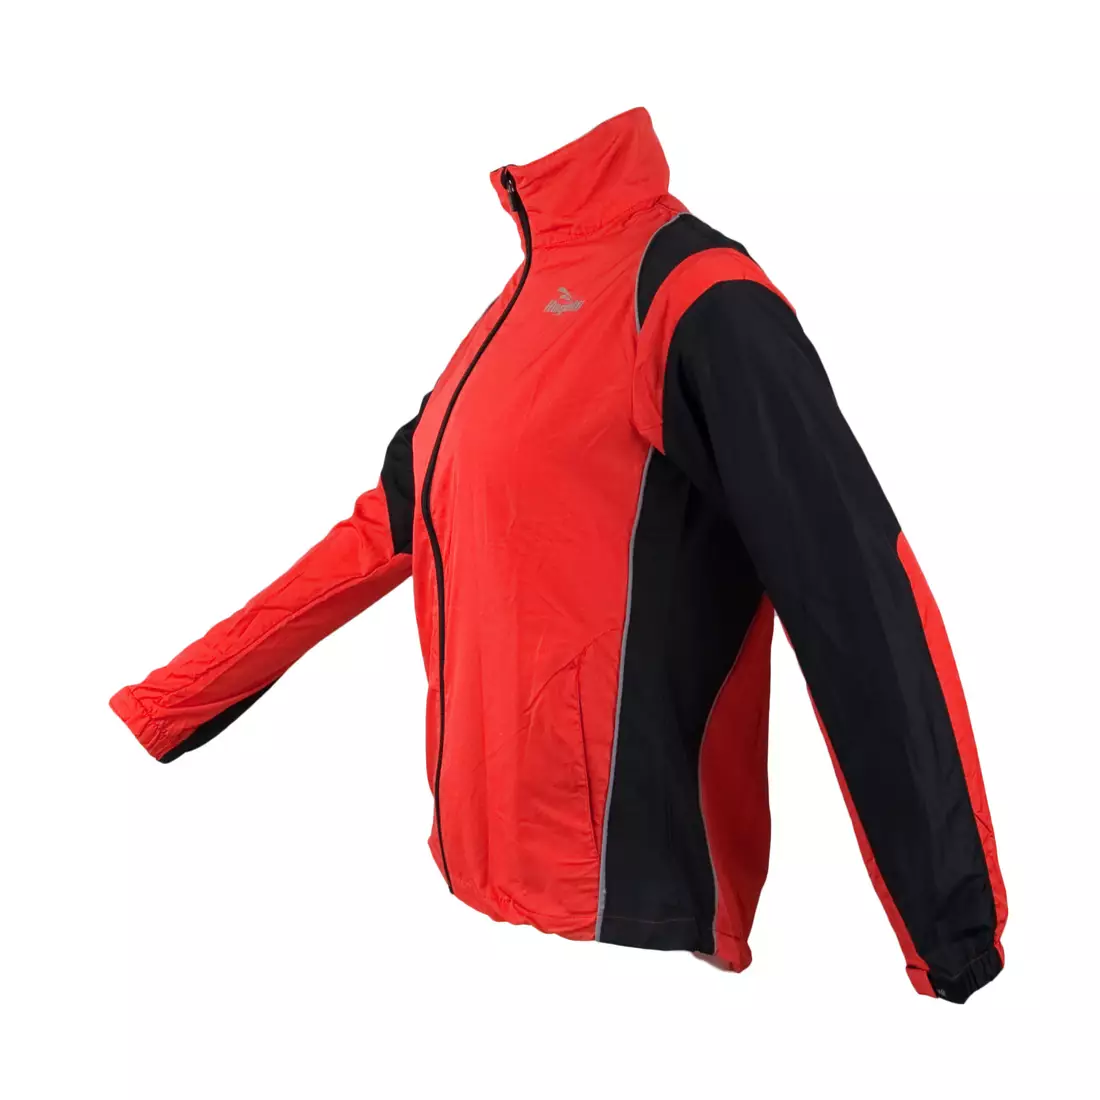 ROGELLI RUN ELVI - ultralehká dámská běžecká bunda, červená a černá